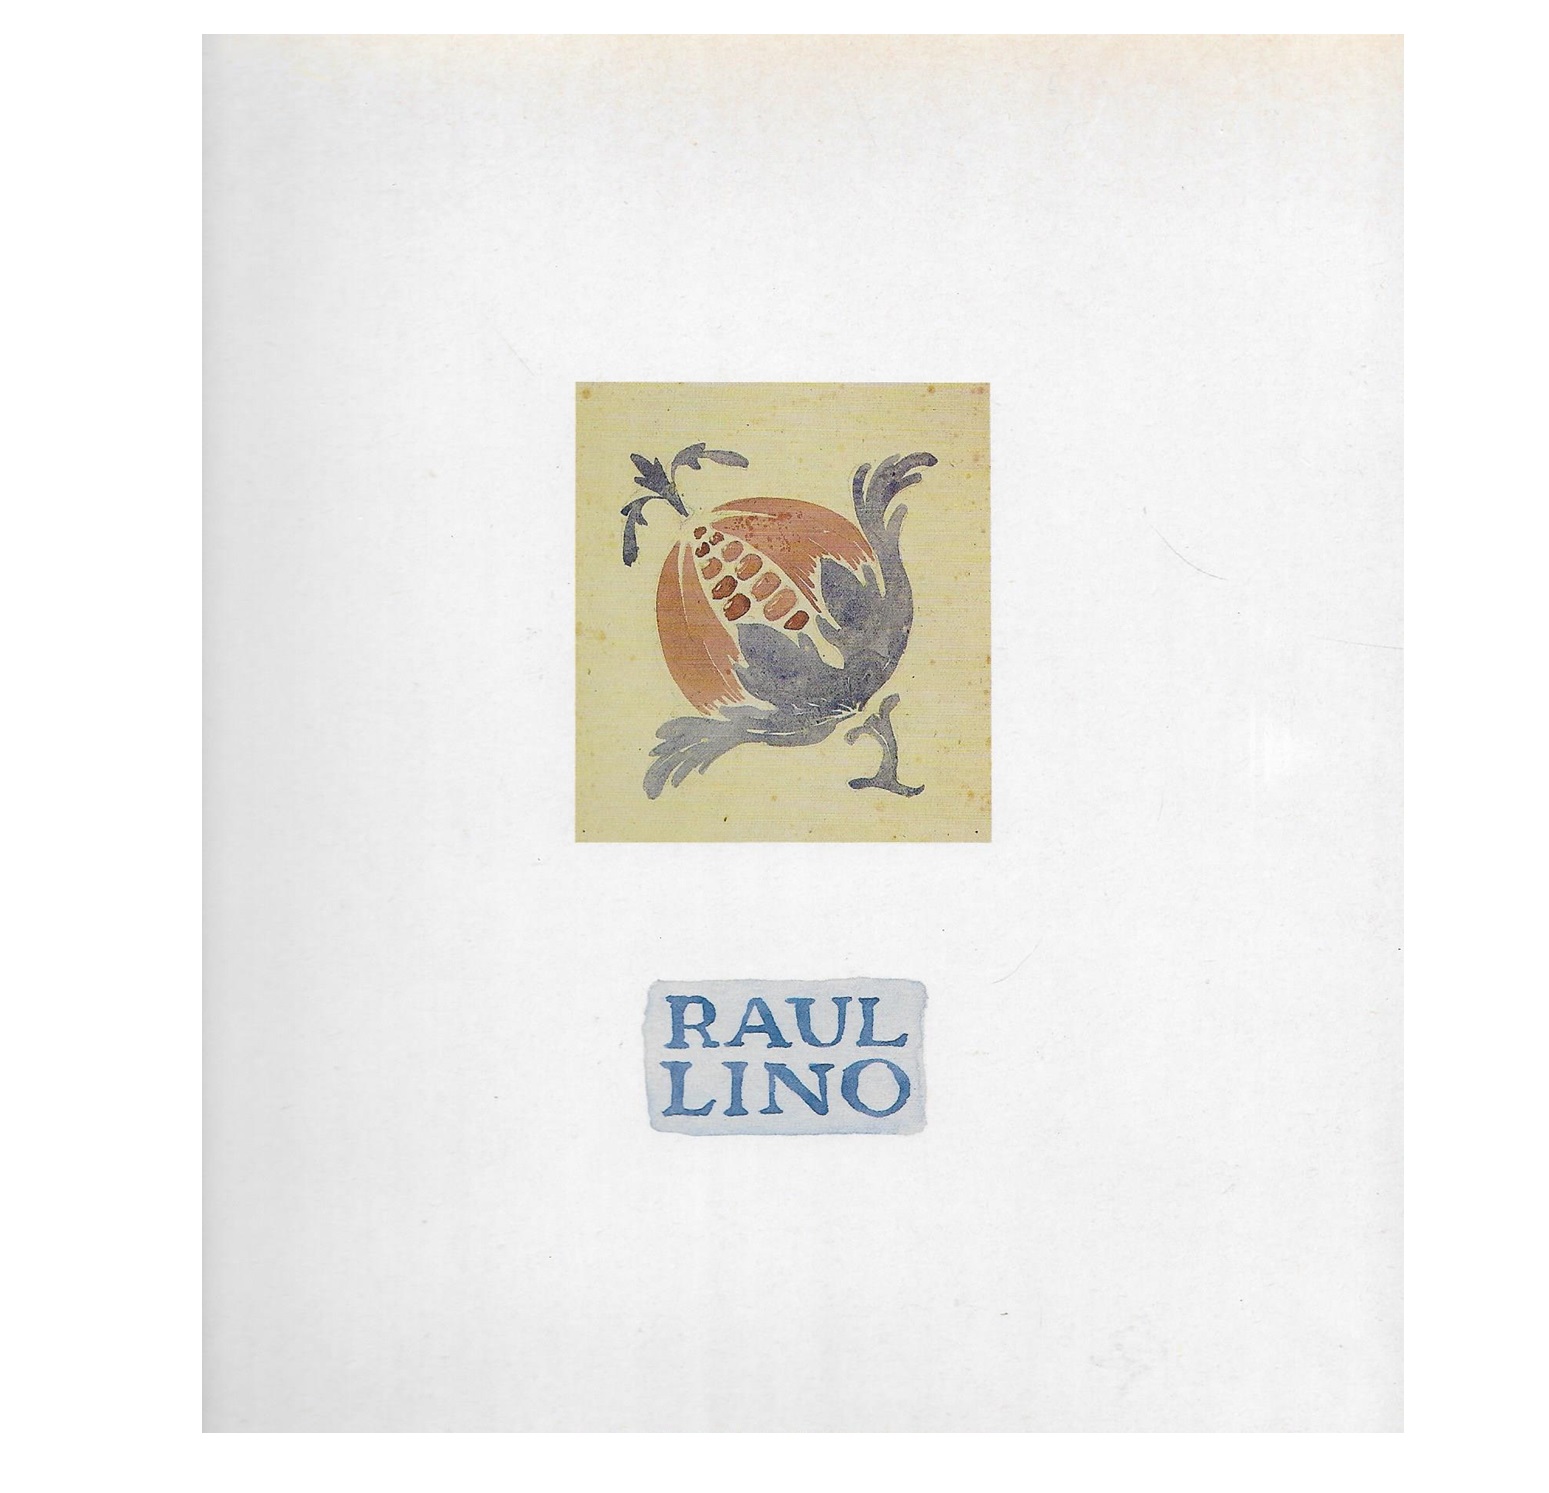 RAUL LINO: ARTES DECORATIVAS